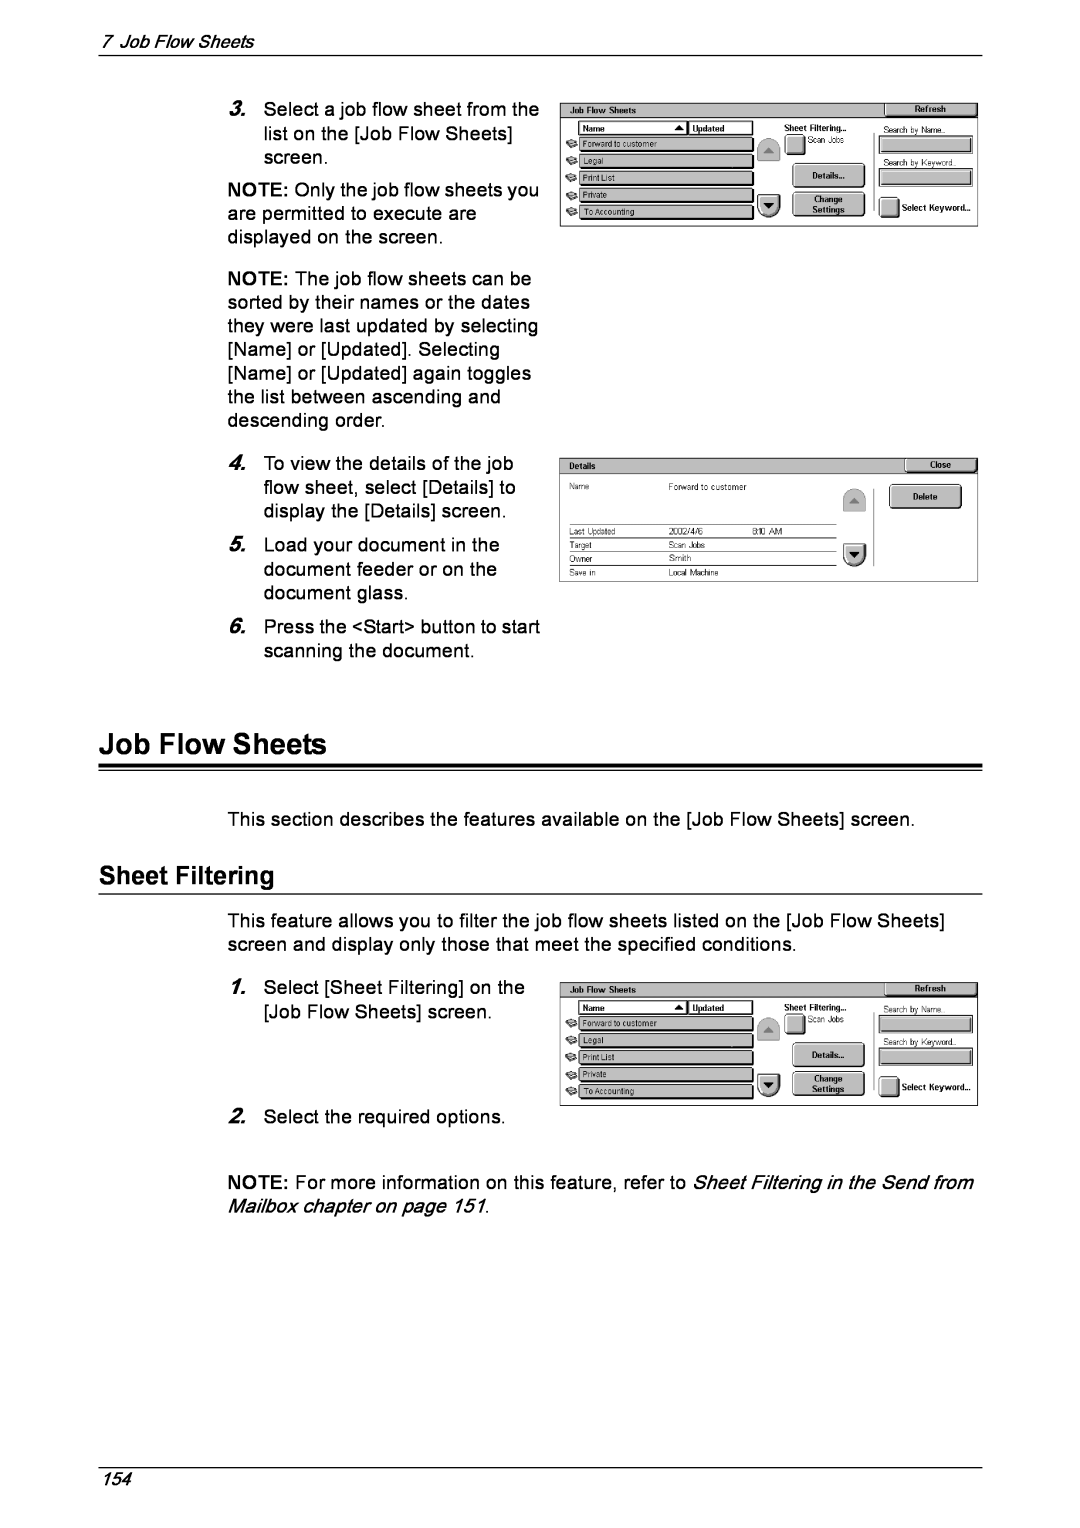 Xerox 5230 manual Job Flow Sheets, Sheet Filtering 